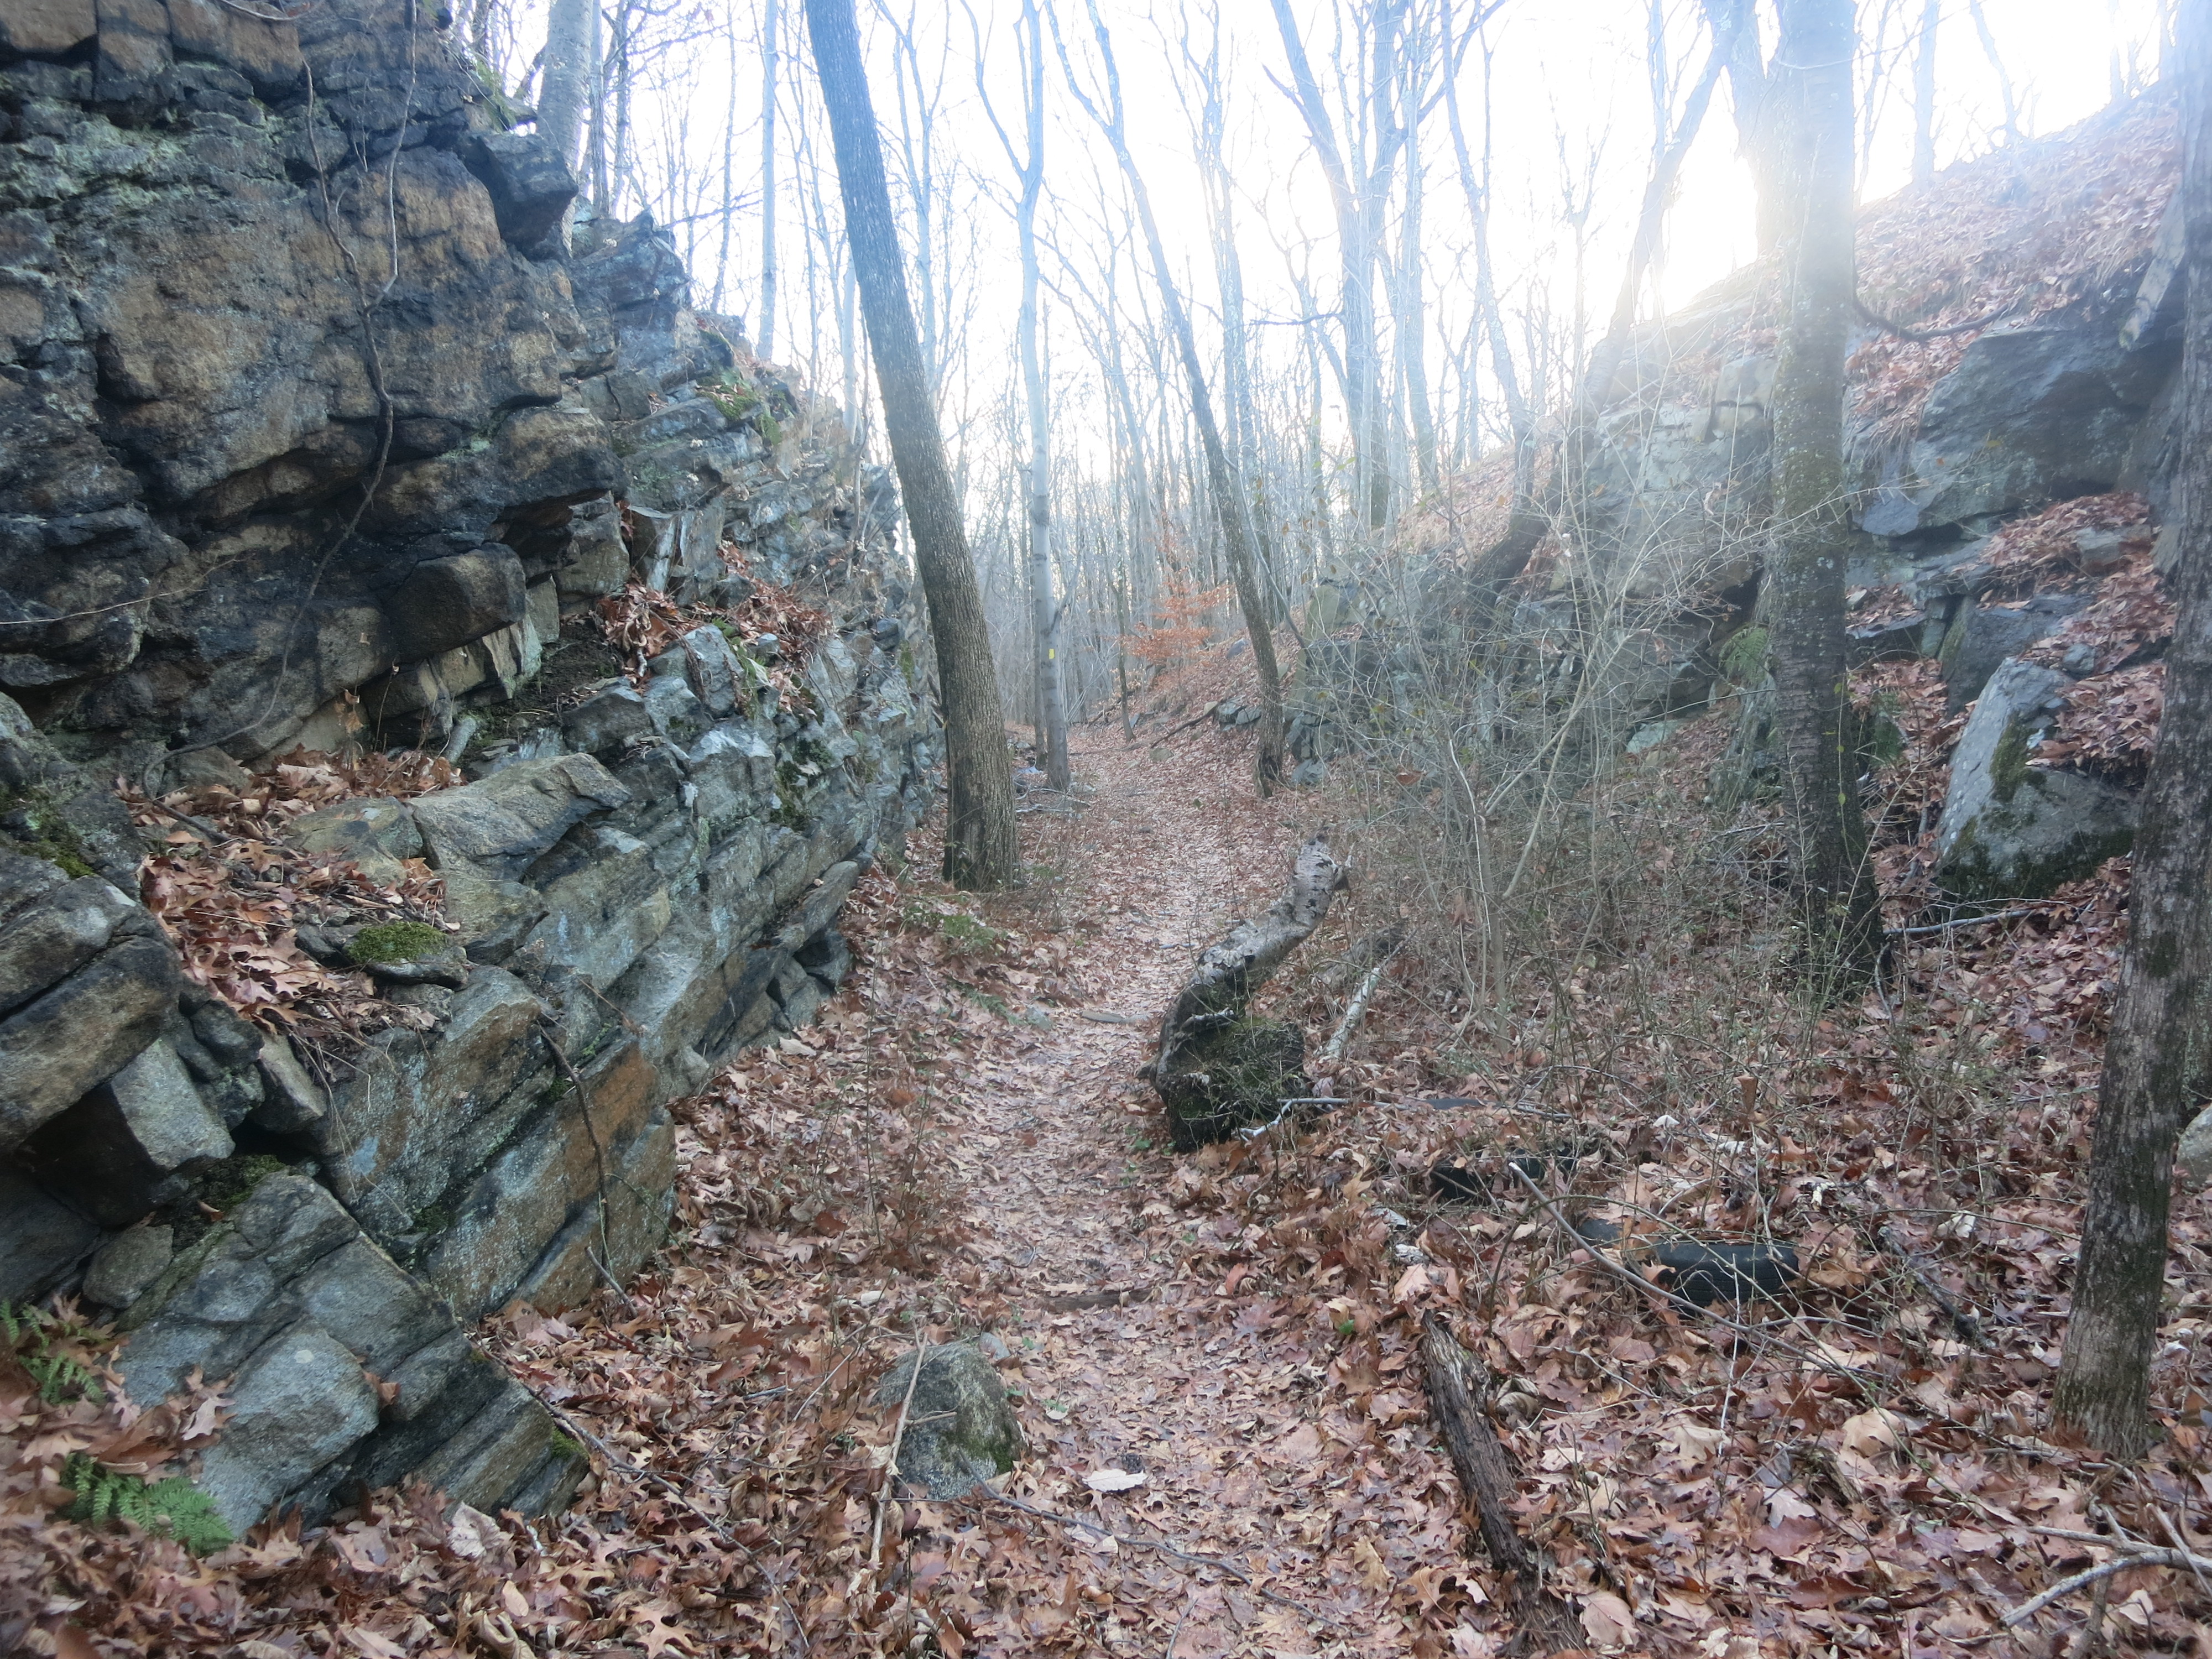 Wildcat Ridge Trail in a rock cut for the former Oreland Branch Railroad - Photo by Daniel Chazin